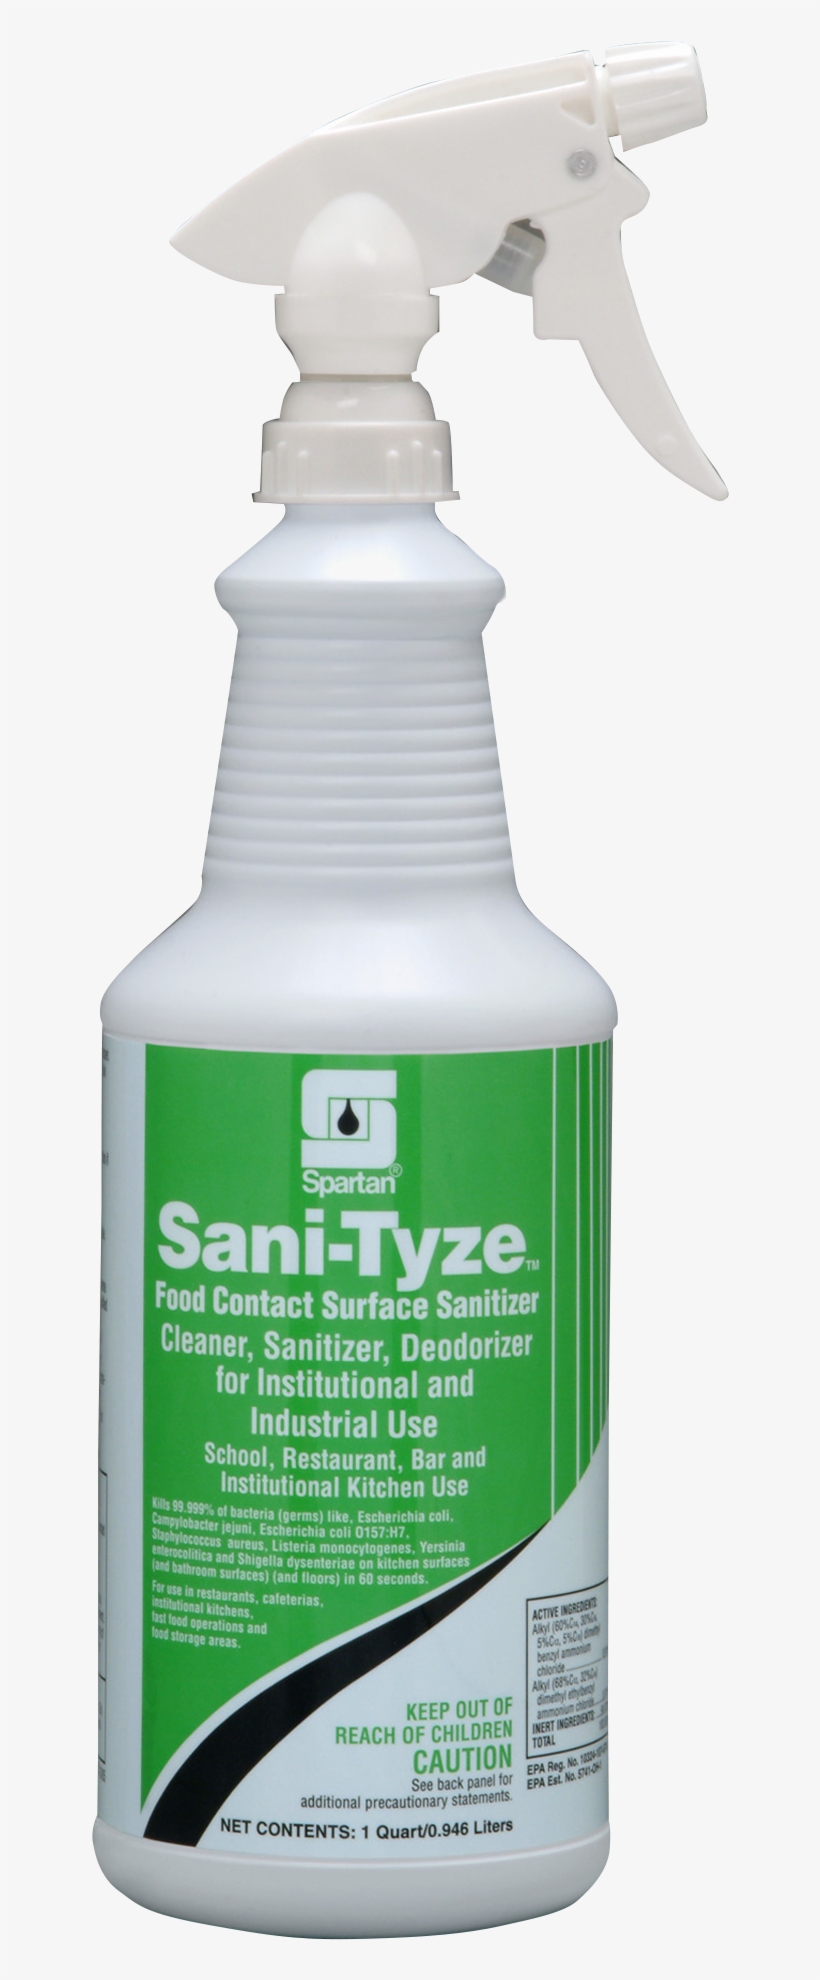 319503 Sani-tyze Copy - Spartan Sani-tyze Food Contact Surface Sanitizer 1, transparent png #2725466